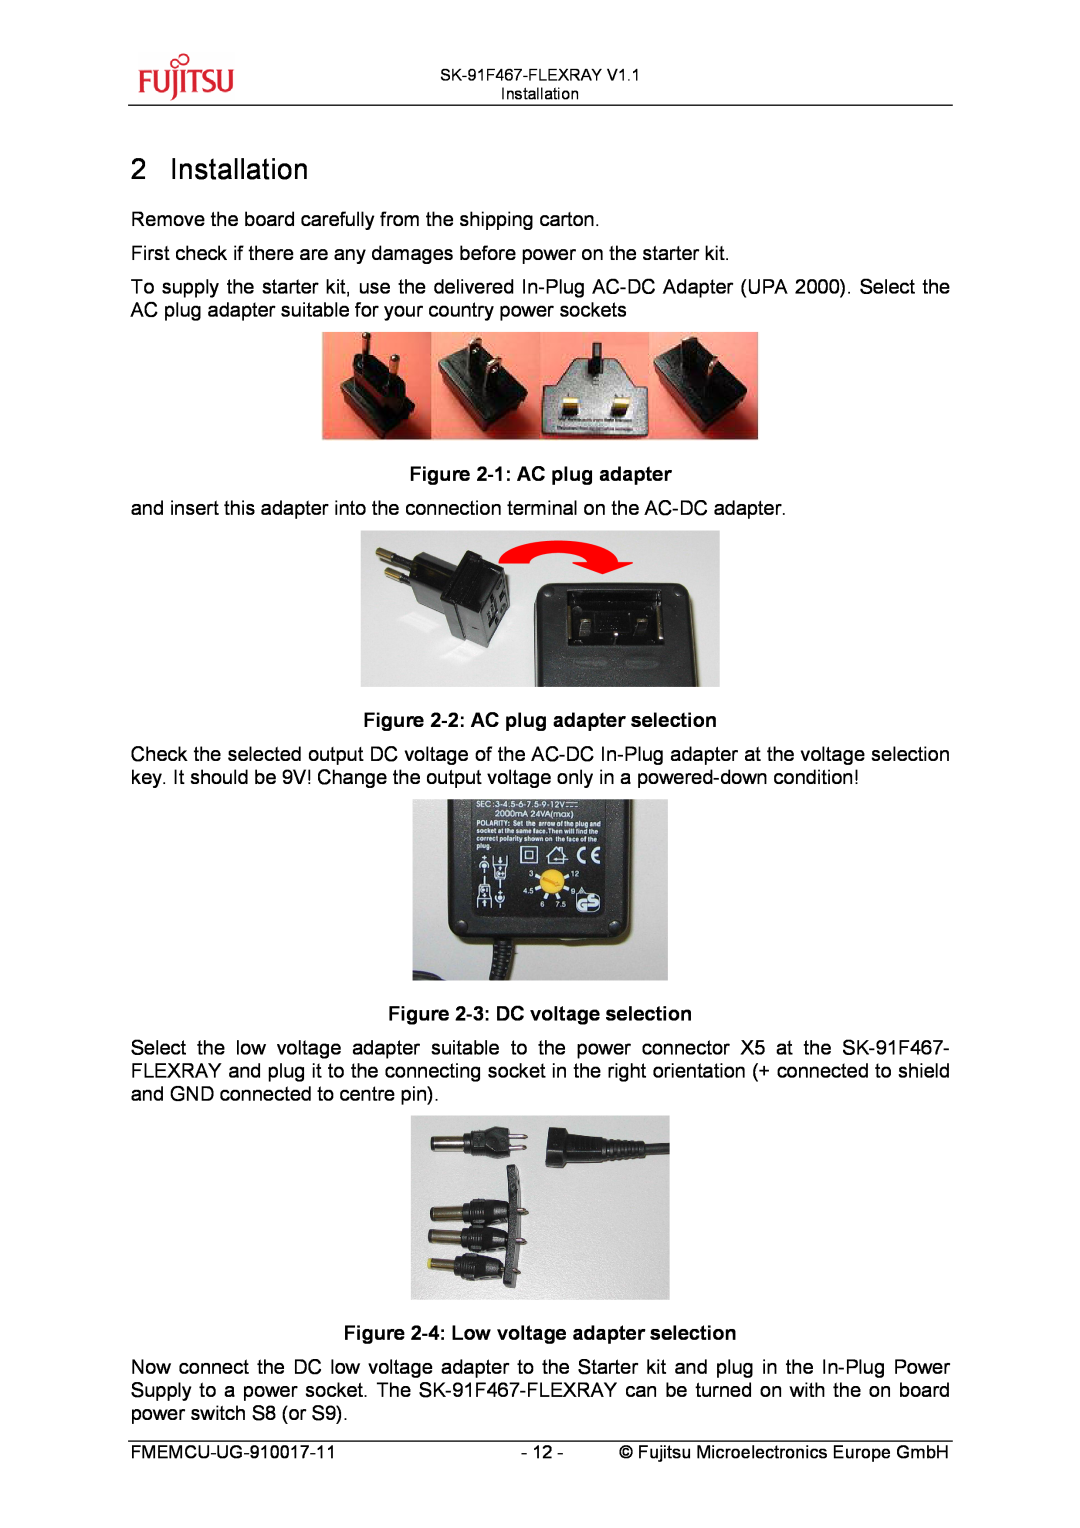 Fujitsu MB91460 SERIES manual Installation, 1 AC plug adapter, 2 AC plug adapter selection, 3 DC voltage selection 